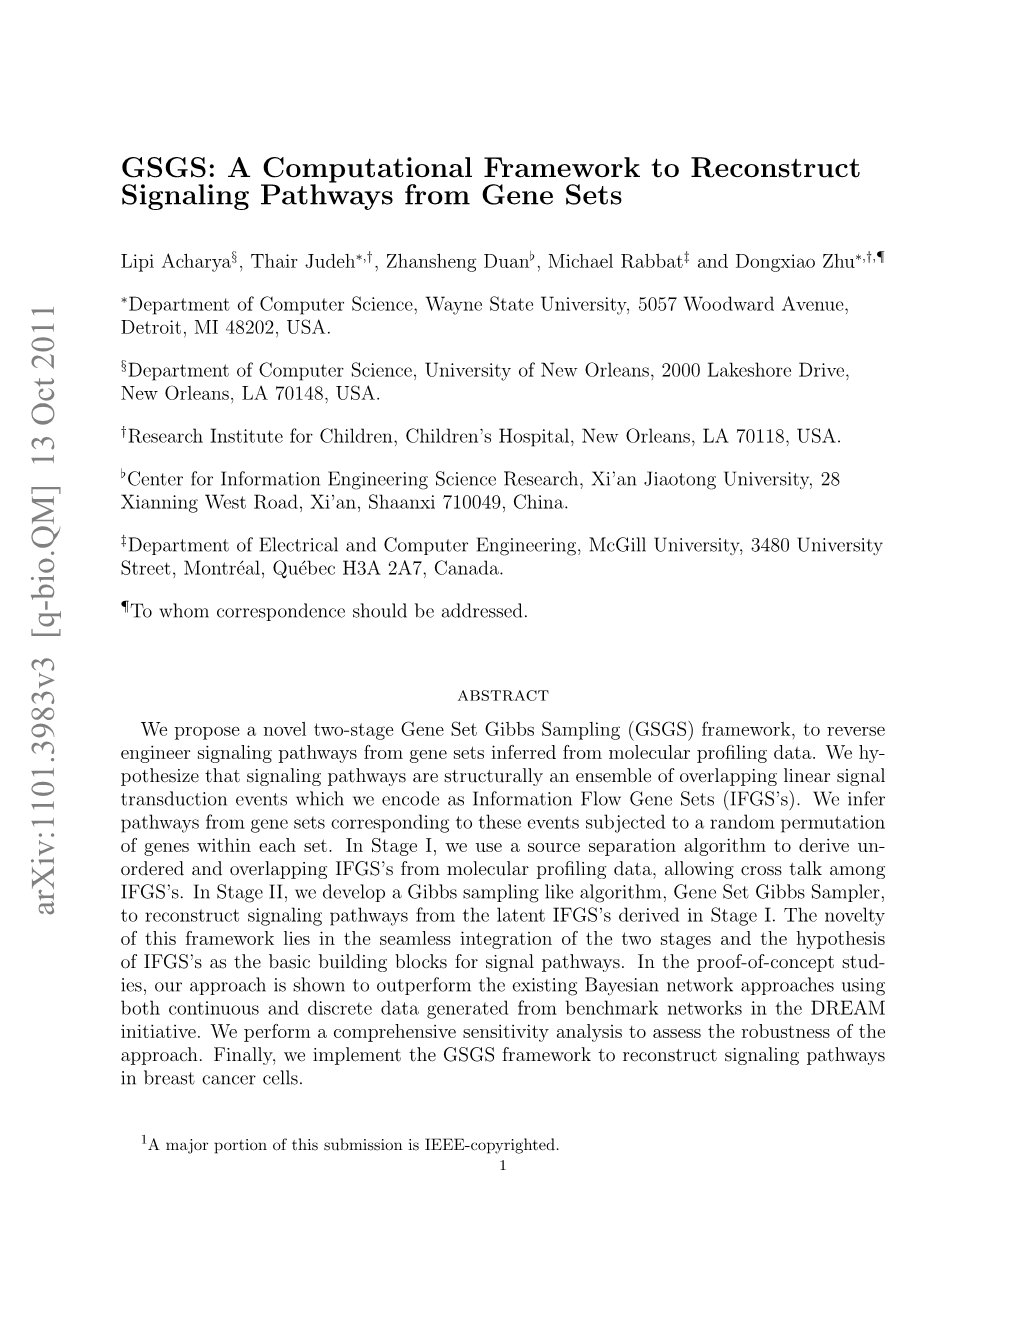 GSGS: a Computational Framework to Reconstruct Signaling Pathways